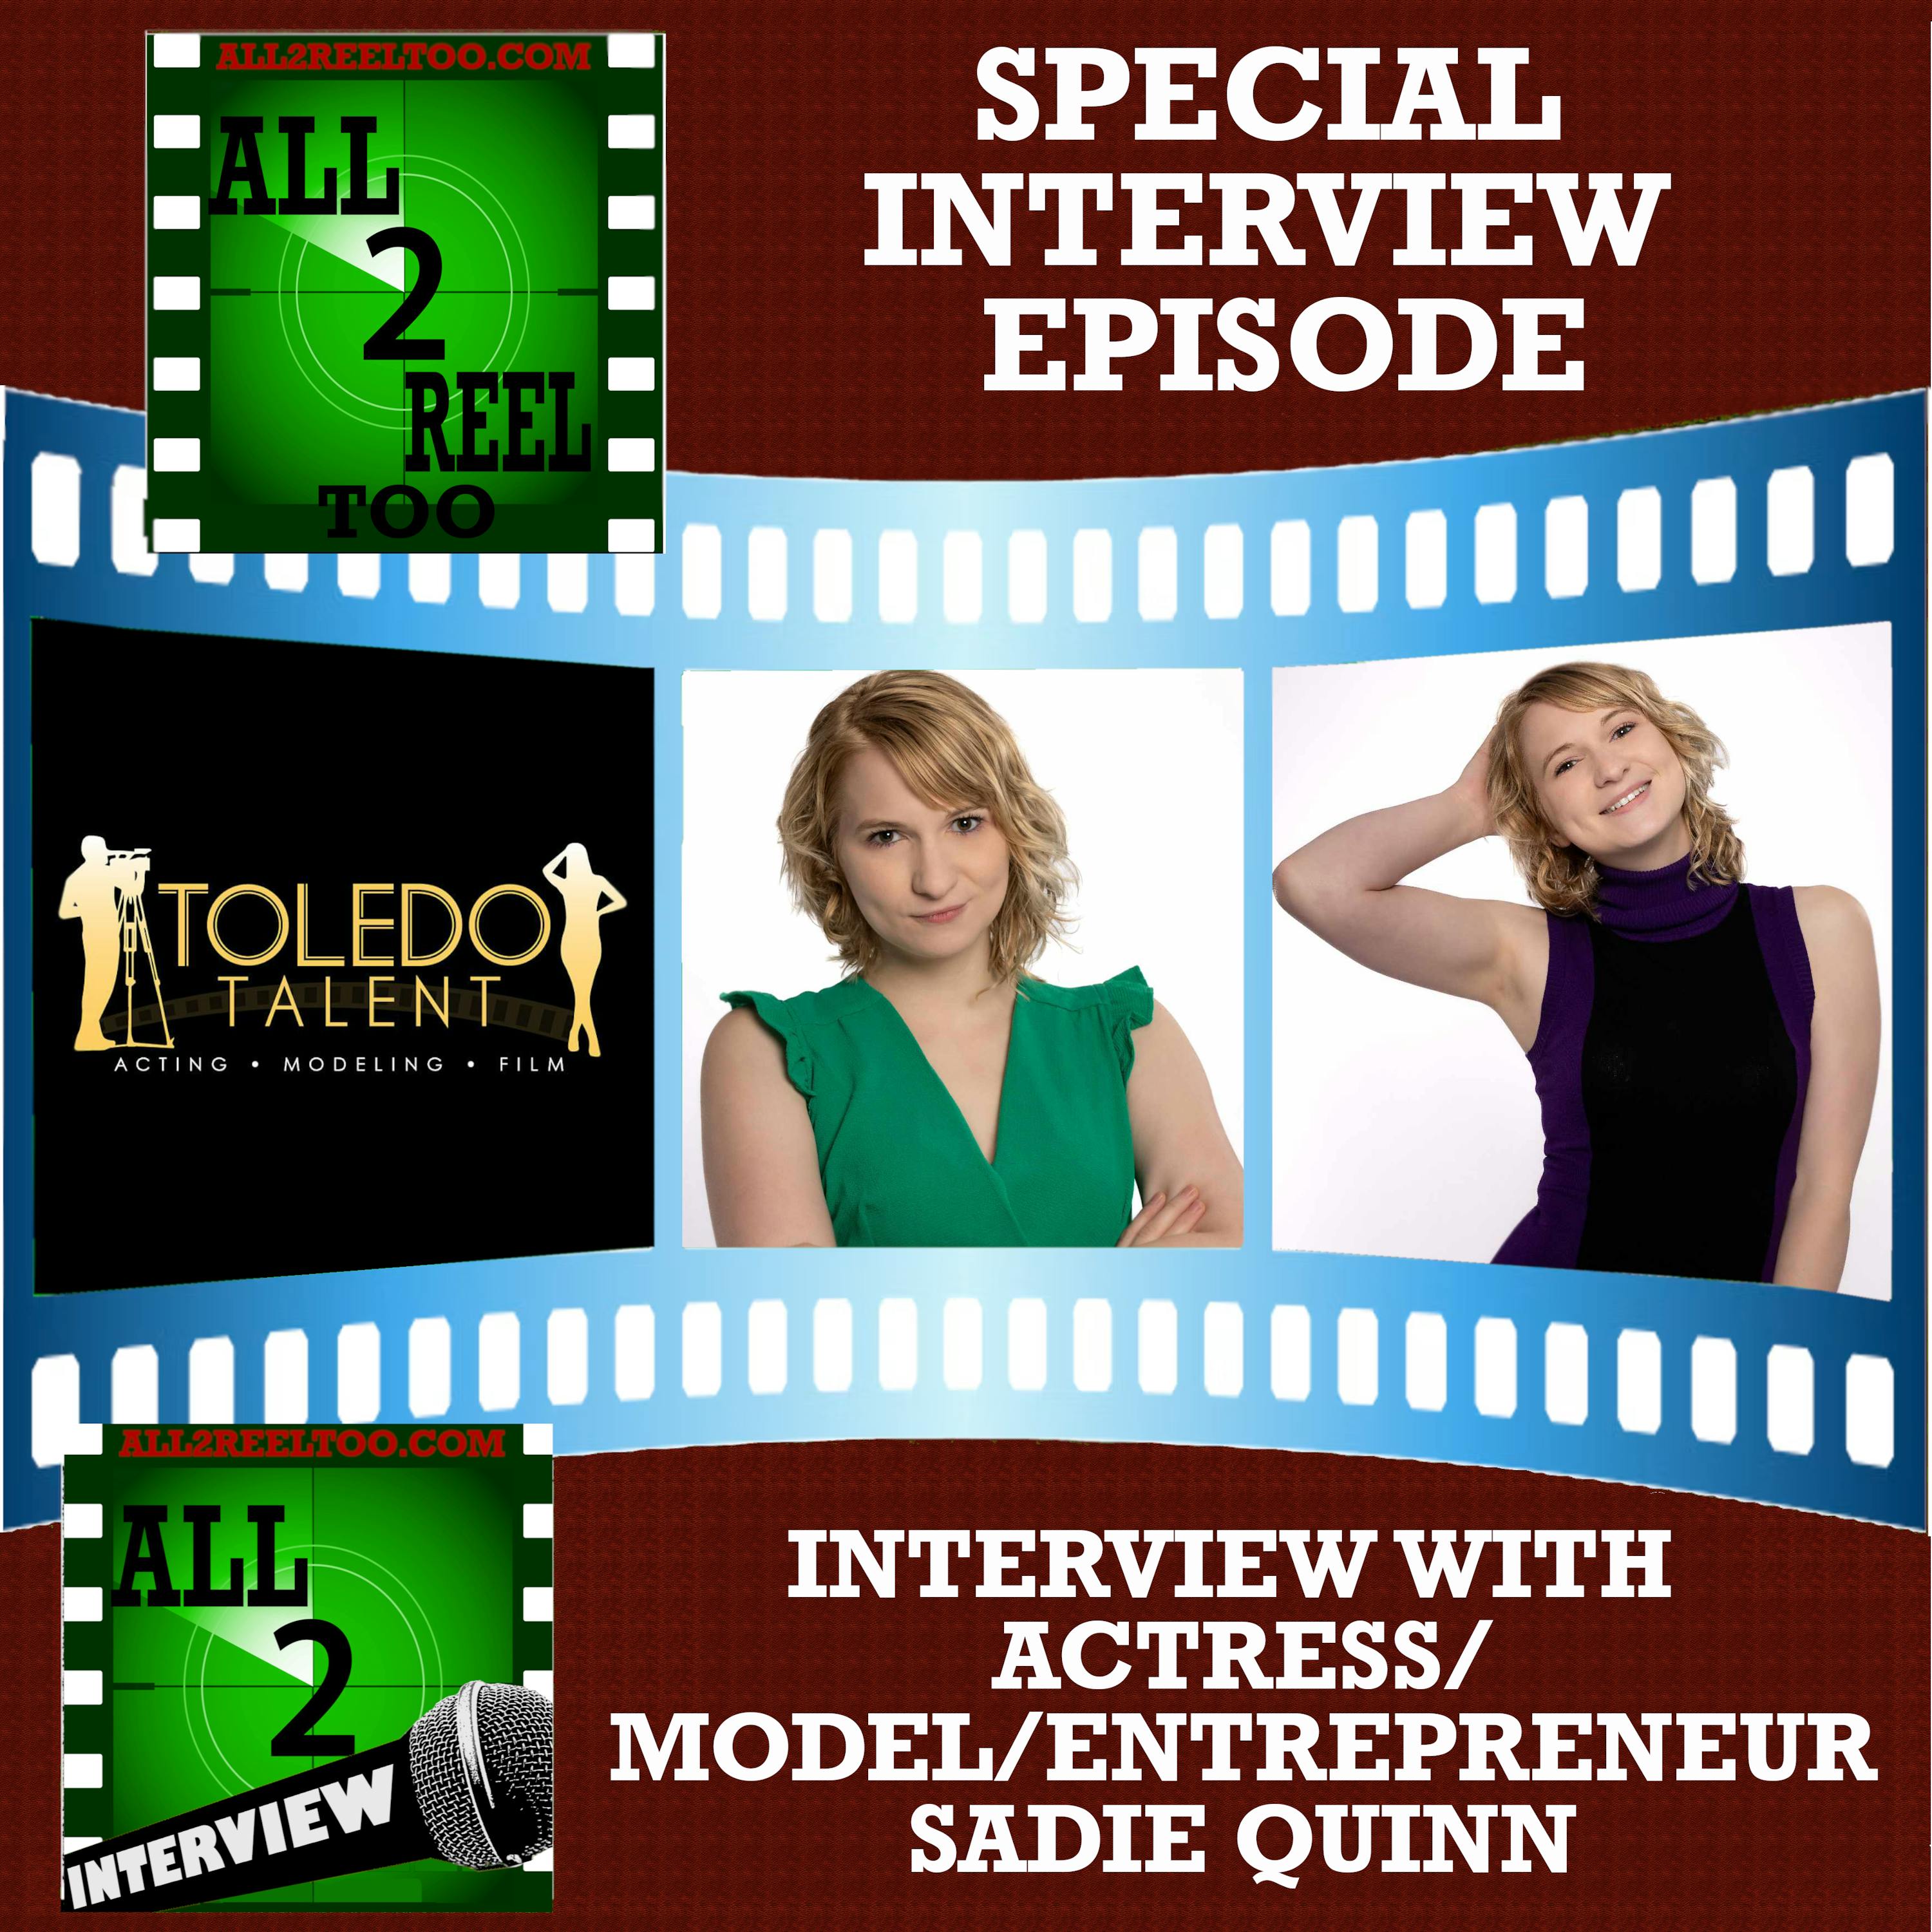 Sadie Quinn Interview - Actress/Model/Entrepreneur